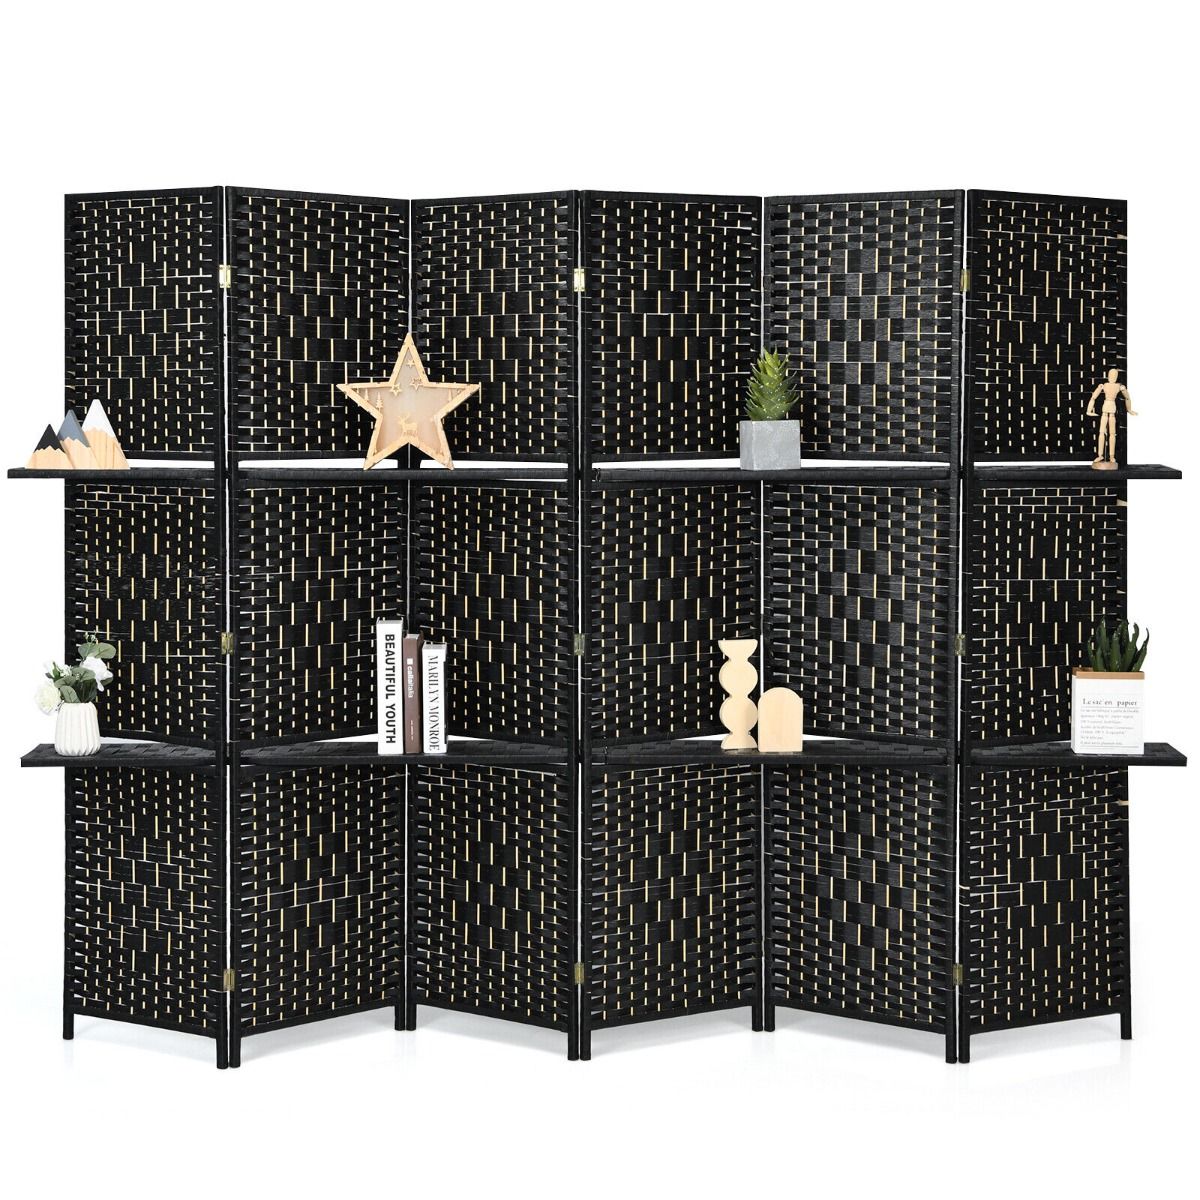 6 Panel Freestanding Folding Room Divider with Removable Shelves